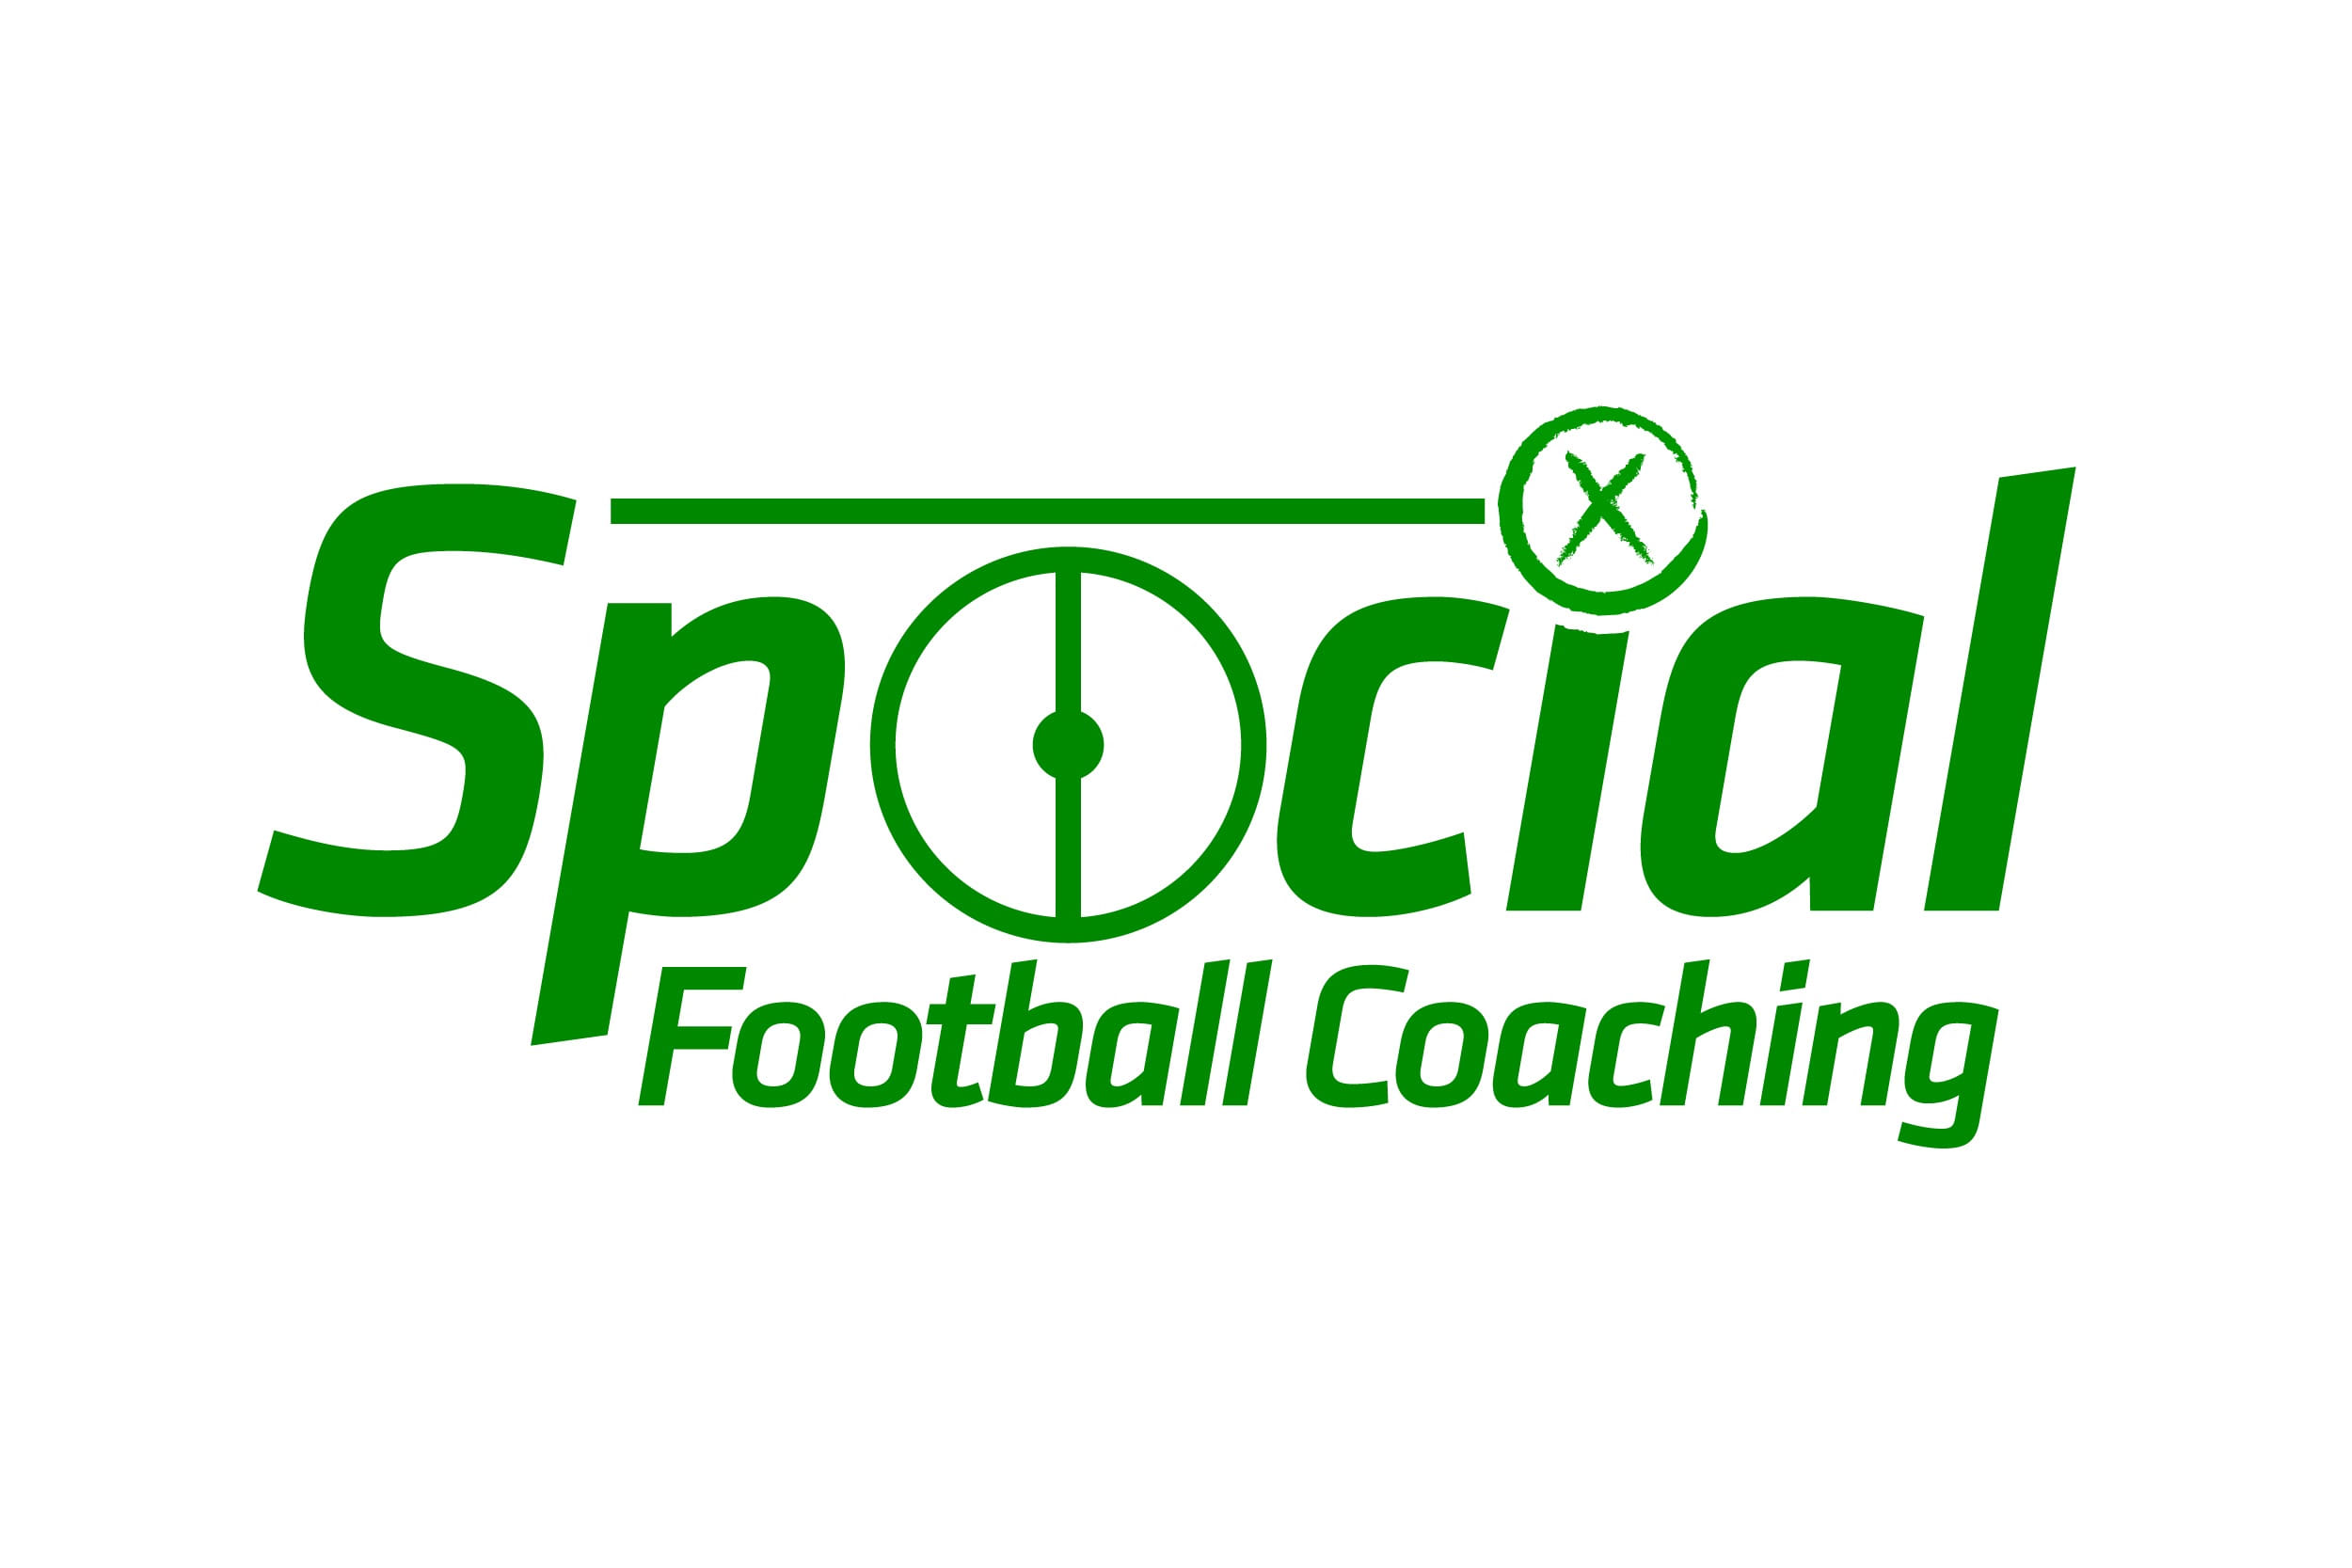 Spocial Football Coaching